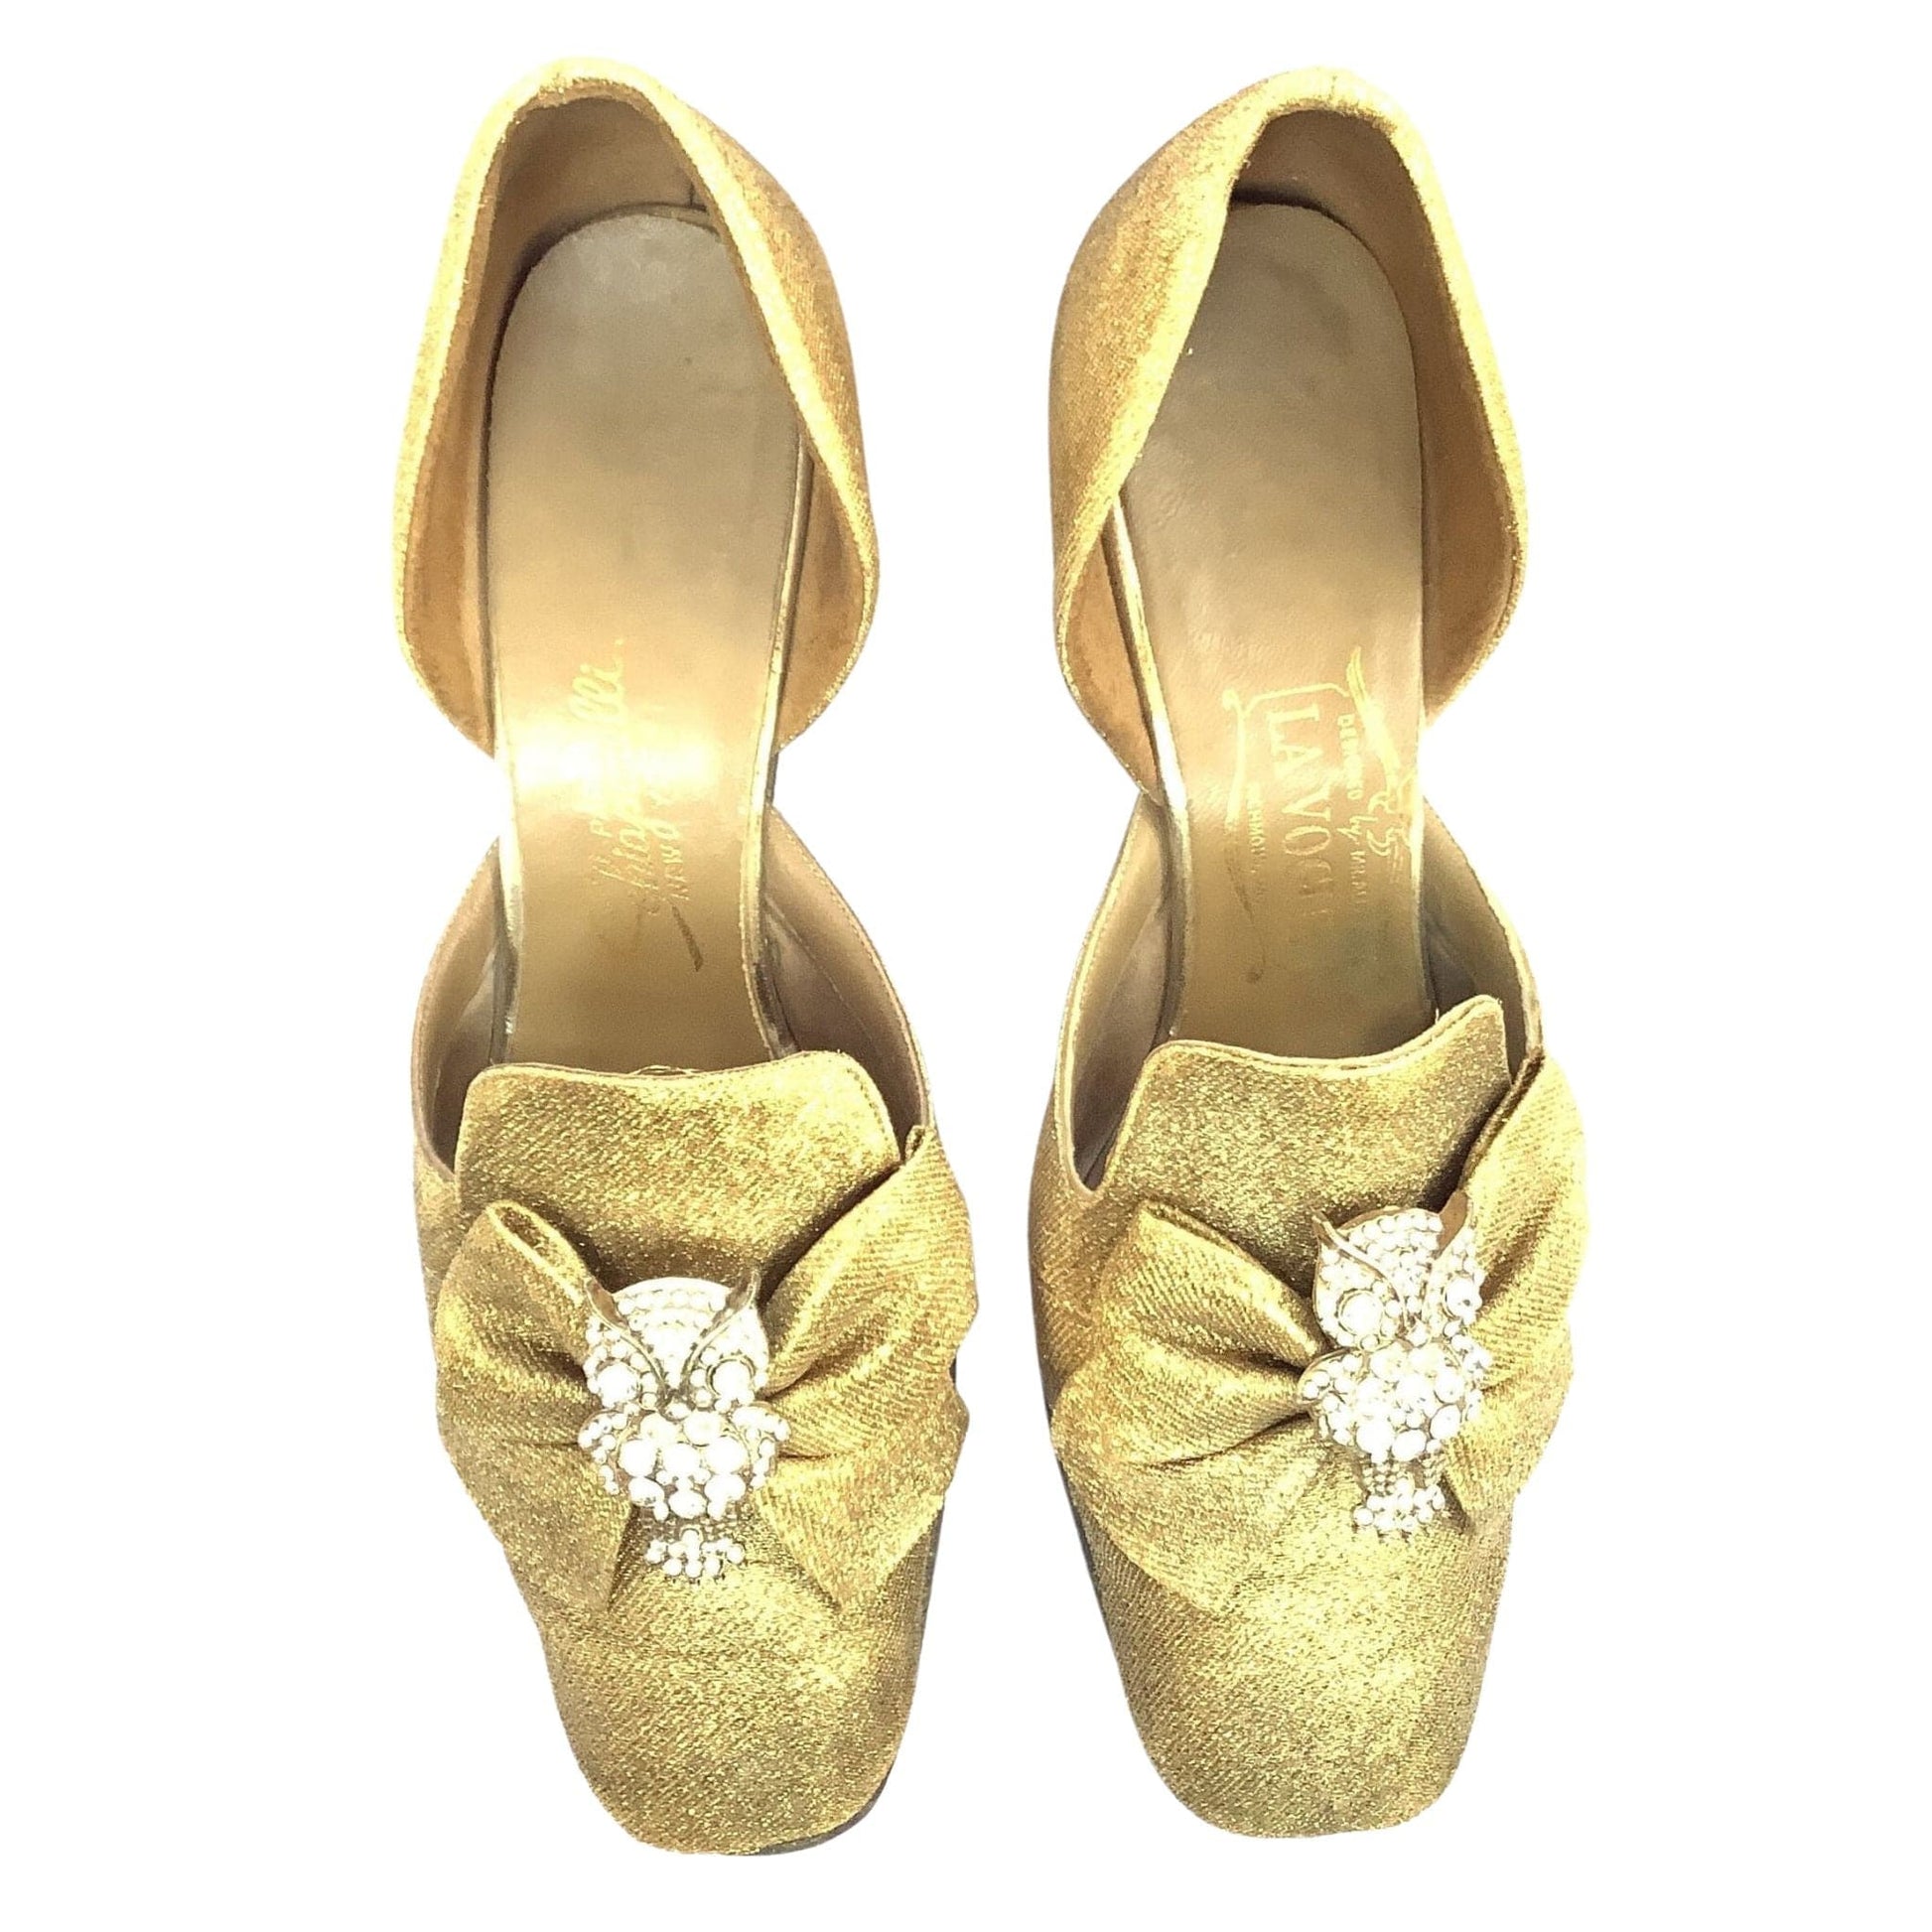 Vintage Schiaparelli Heels 7.5 / Gold / Vintage 1950s